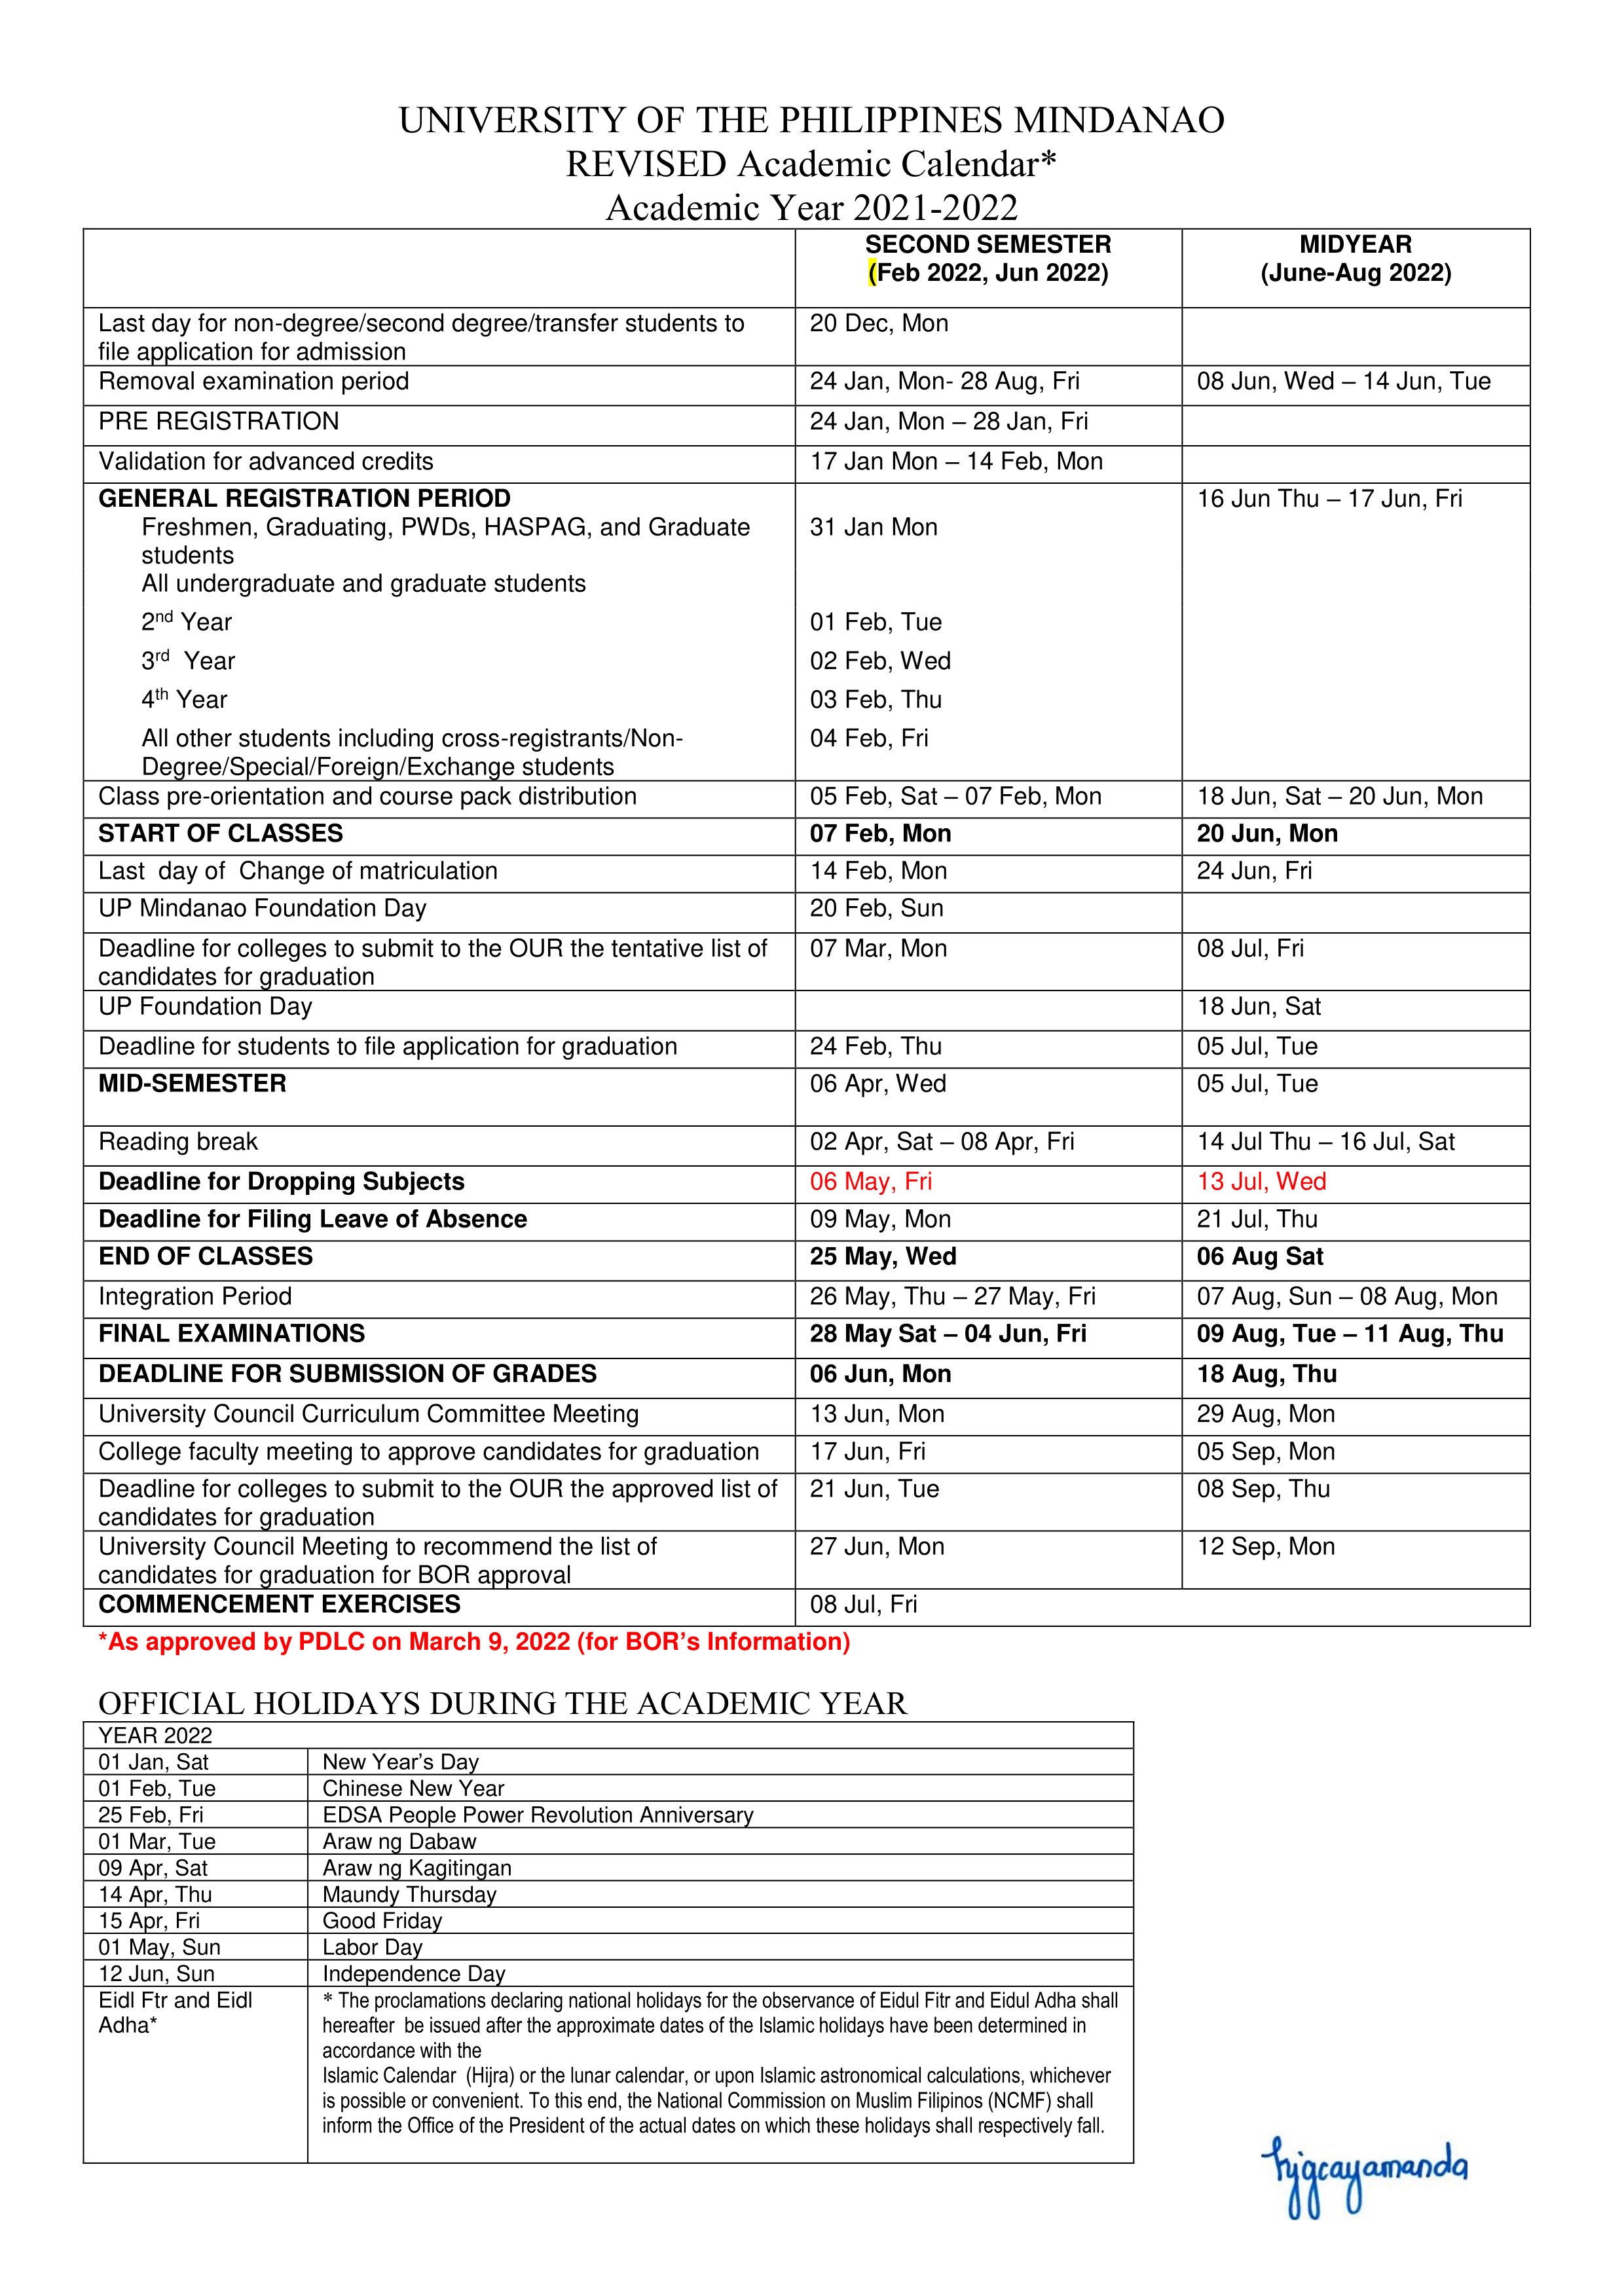 Revised 2021-2022 Academic Calendar UP Mindanao